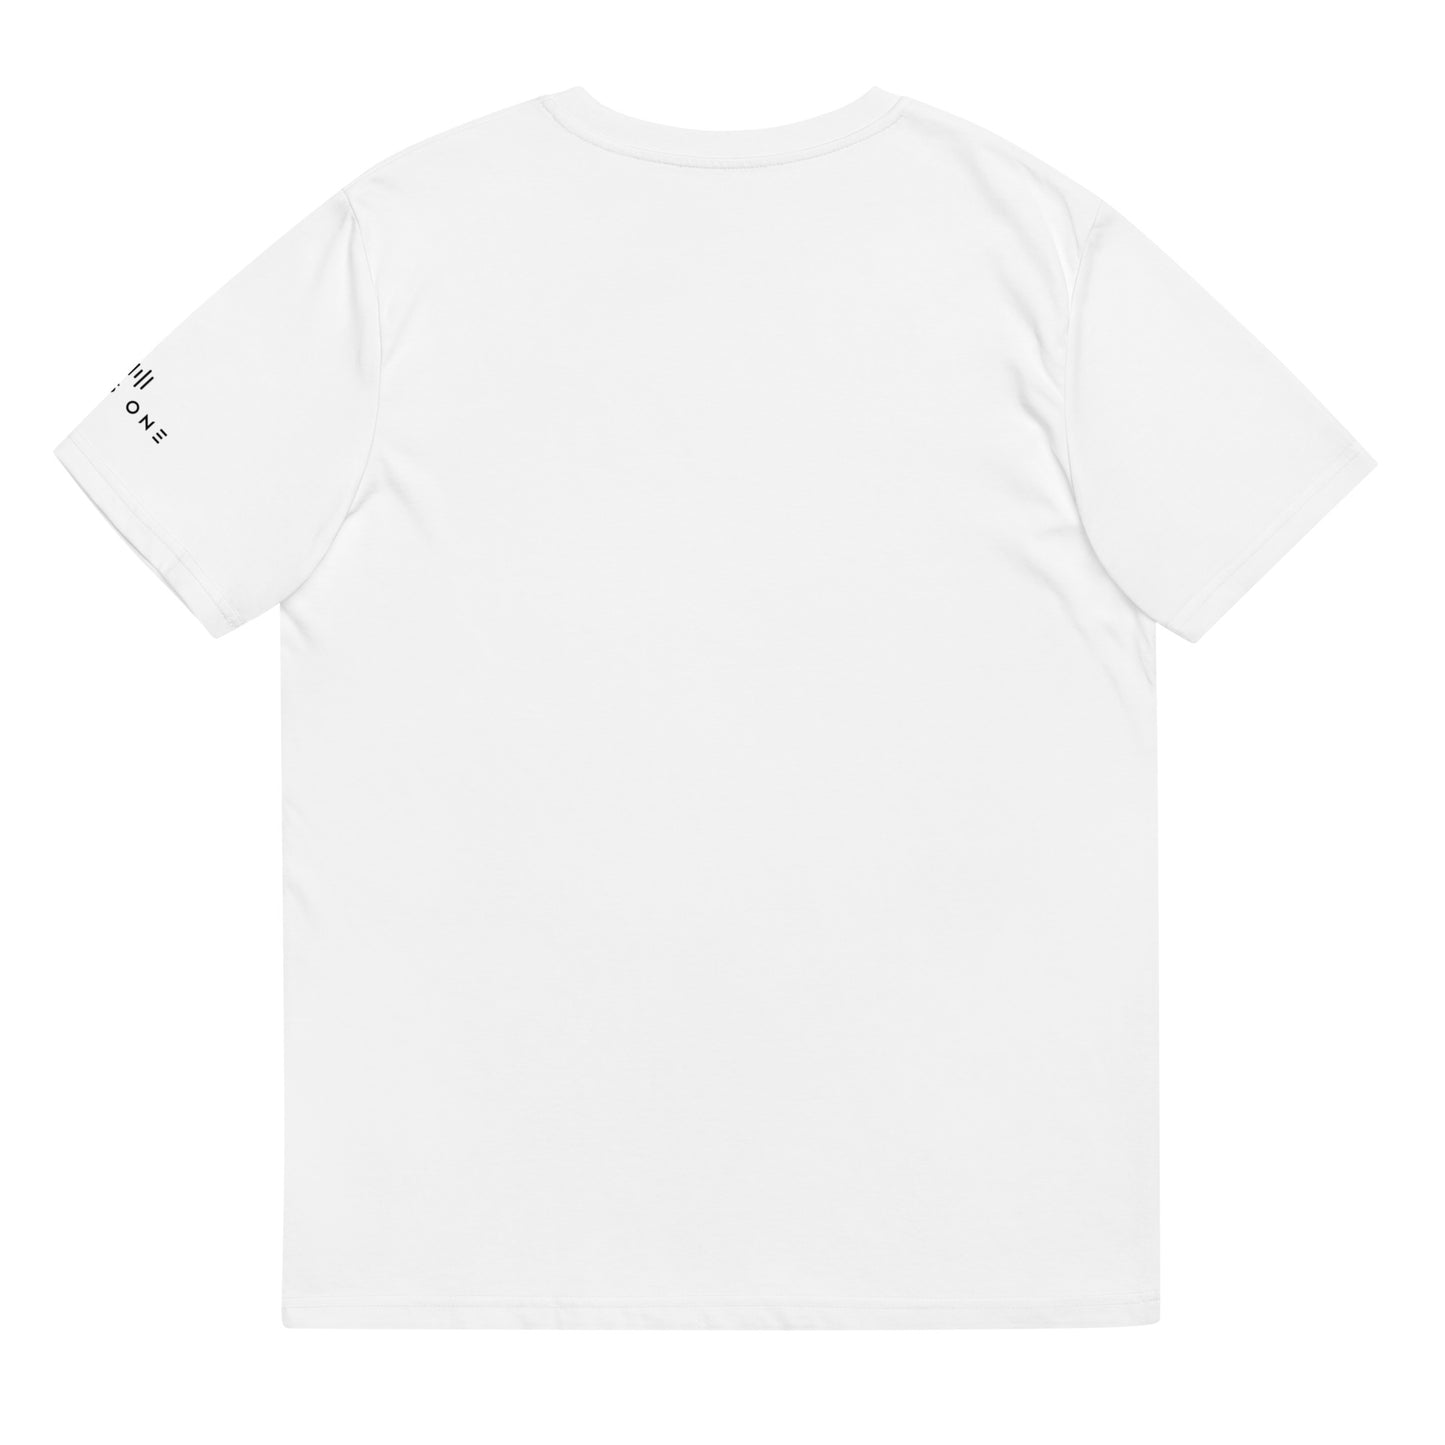 RAW (v3) Unisex organic cotton t-shirt (Black Text)